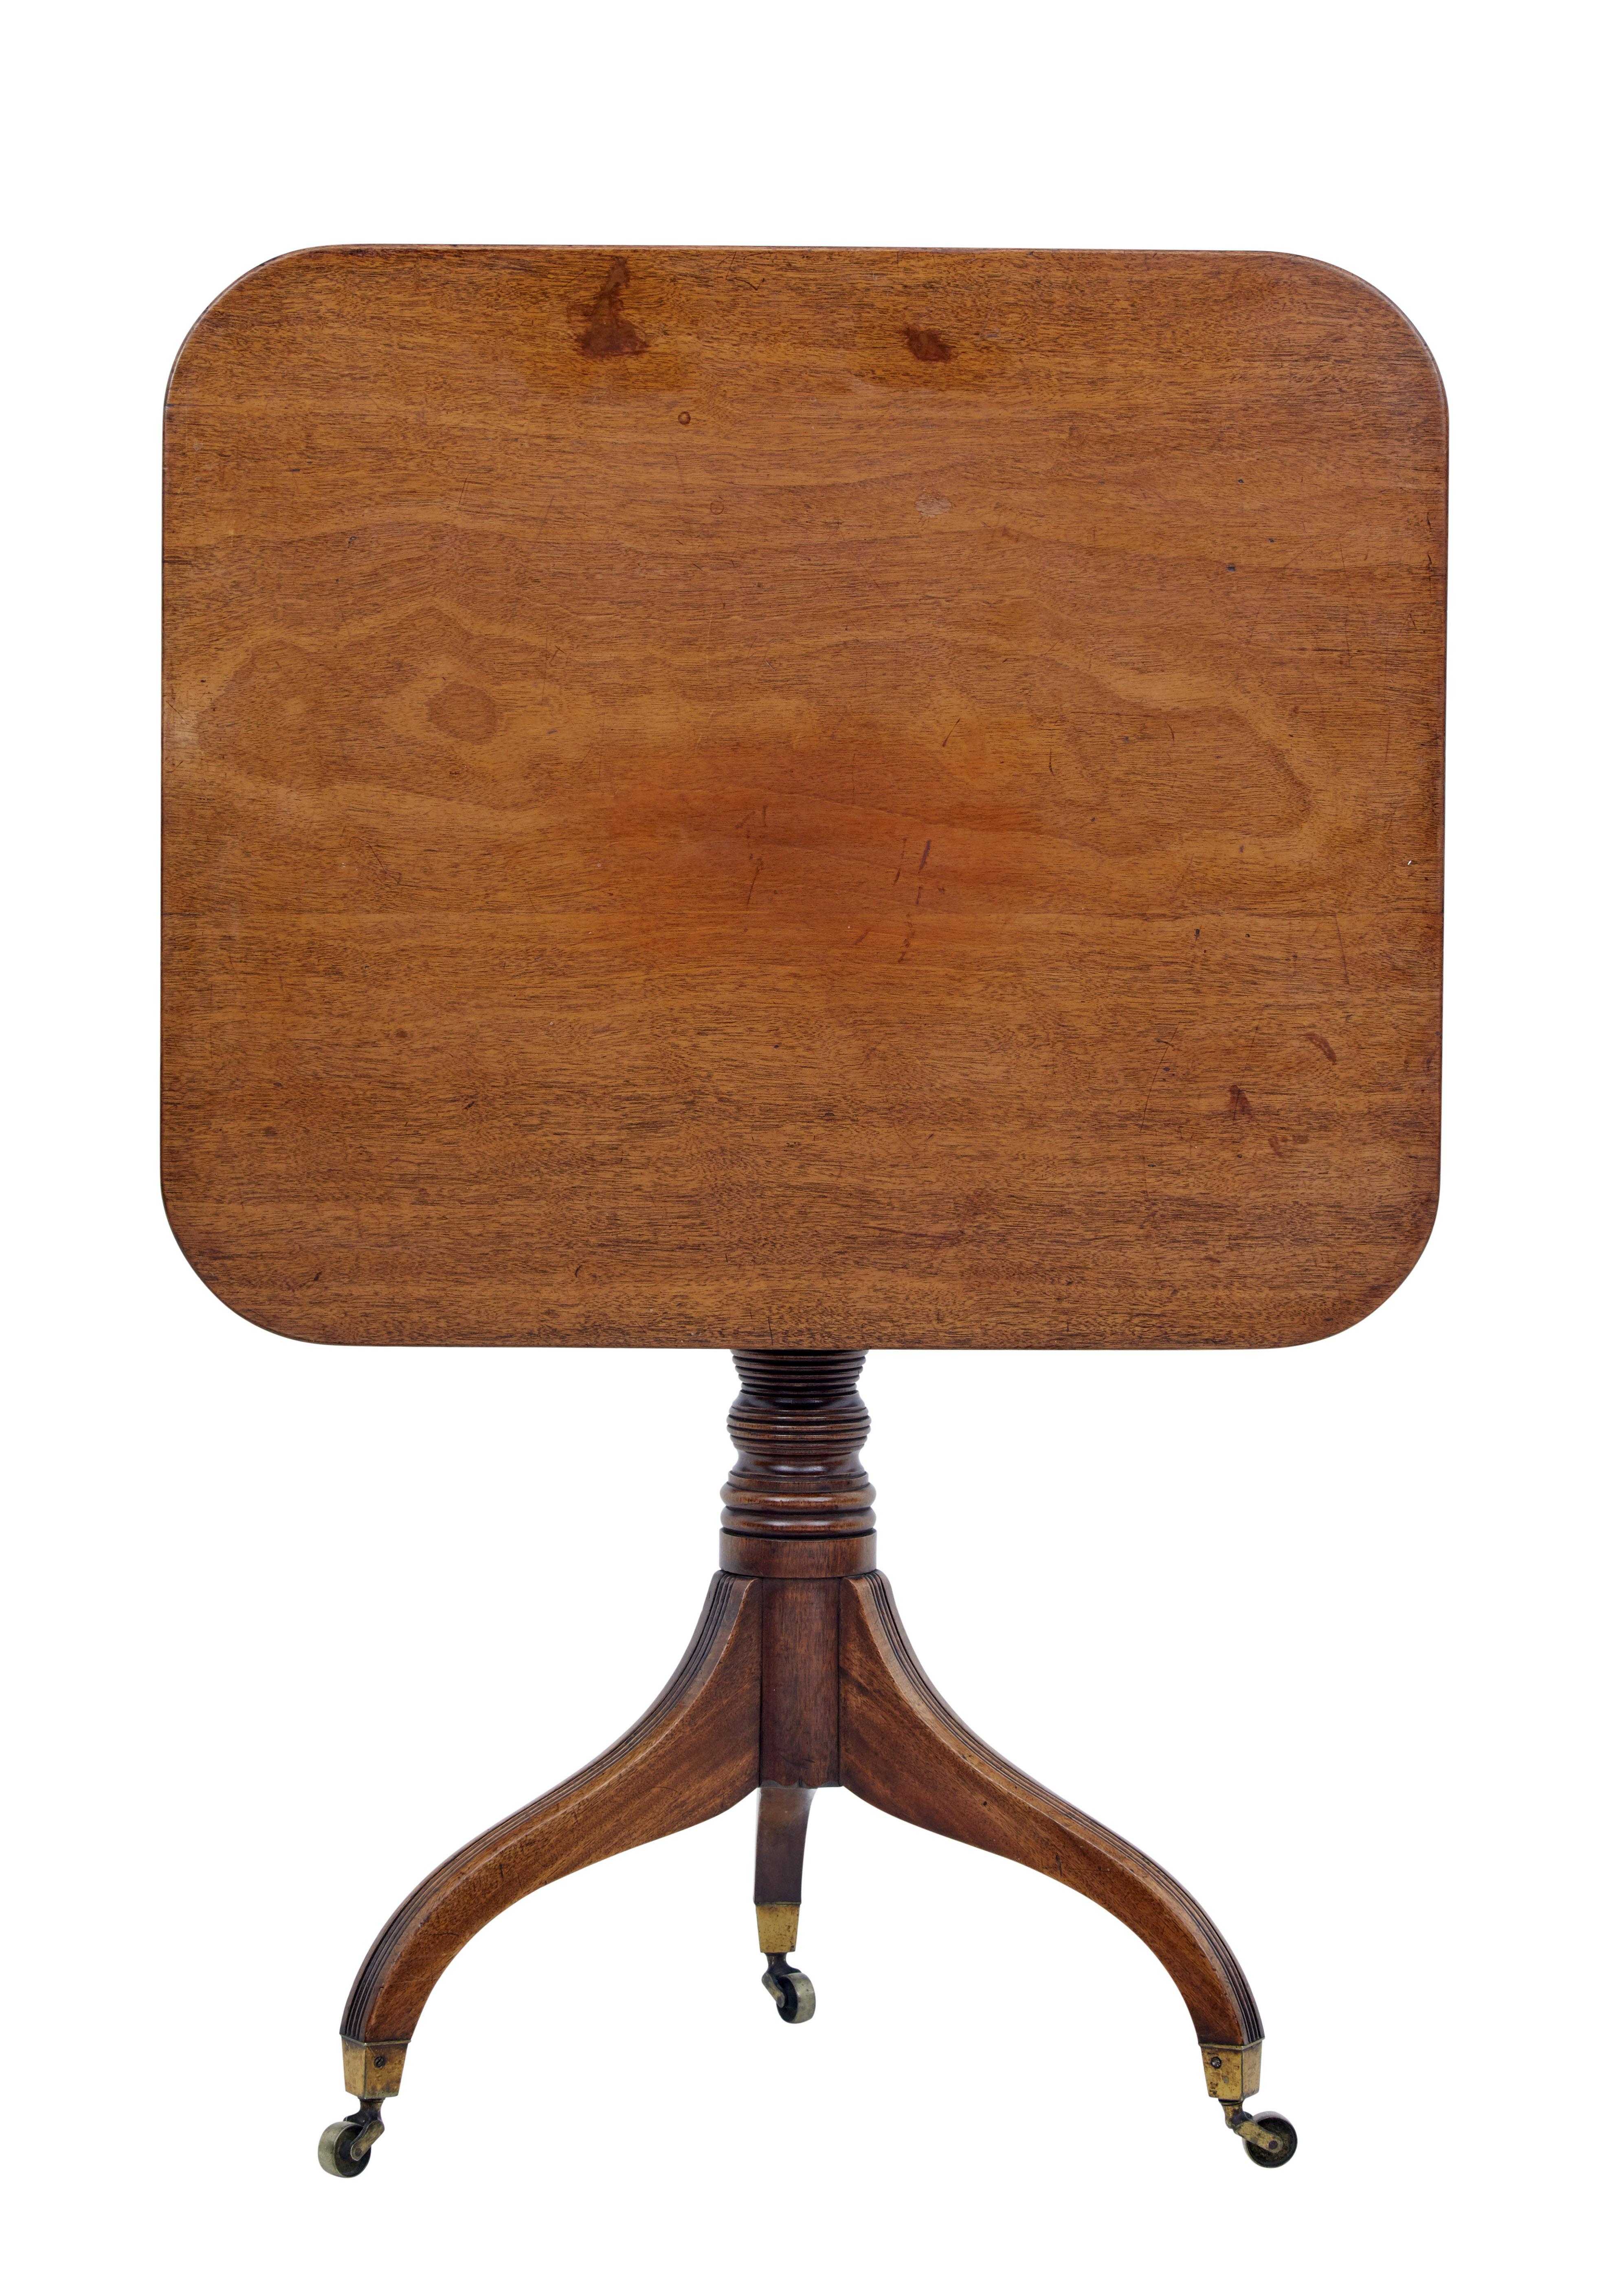 19th Century Mahogany Tilt Top Table (Englisch)